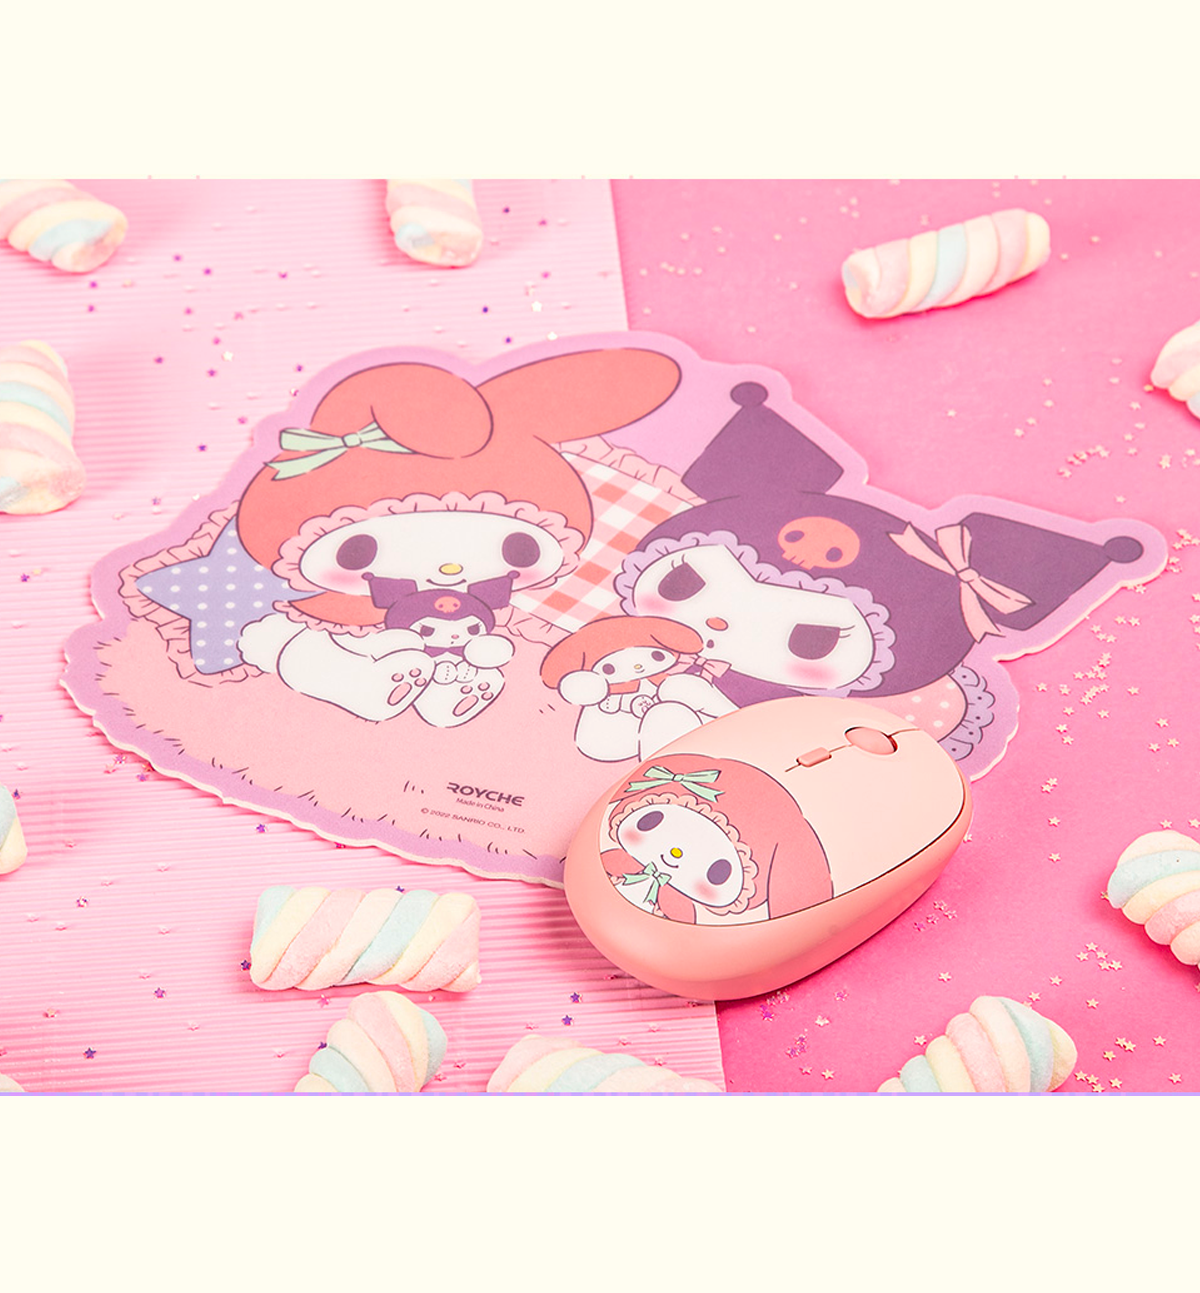 Sanrio My Melody & Kuromi Mousepad